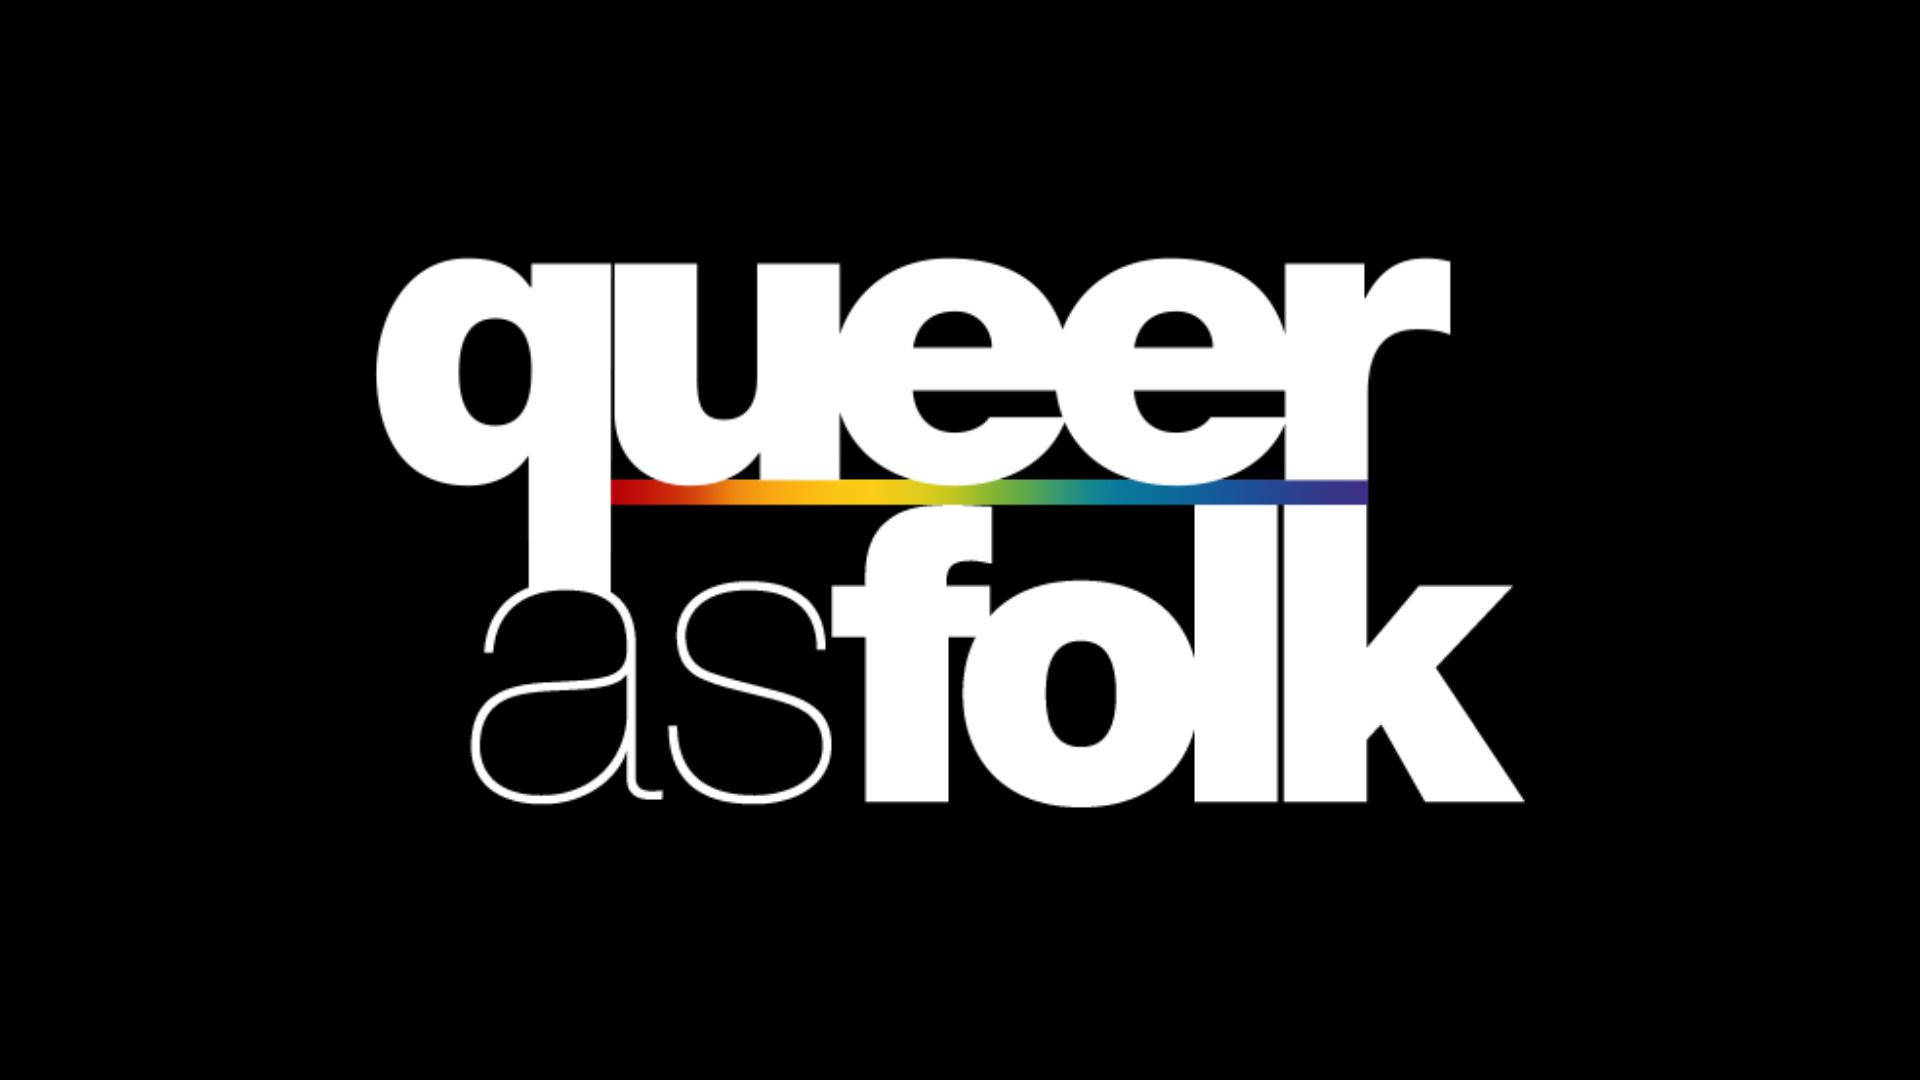 Iconic Queer As Folk Minimalist Logo Wallpaper